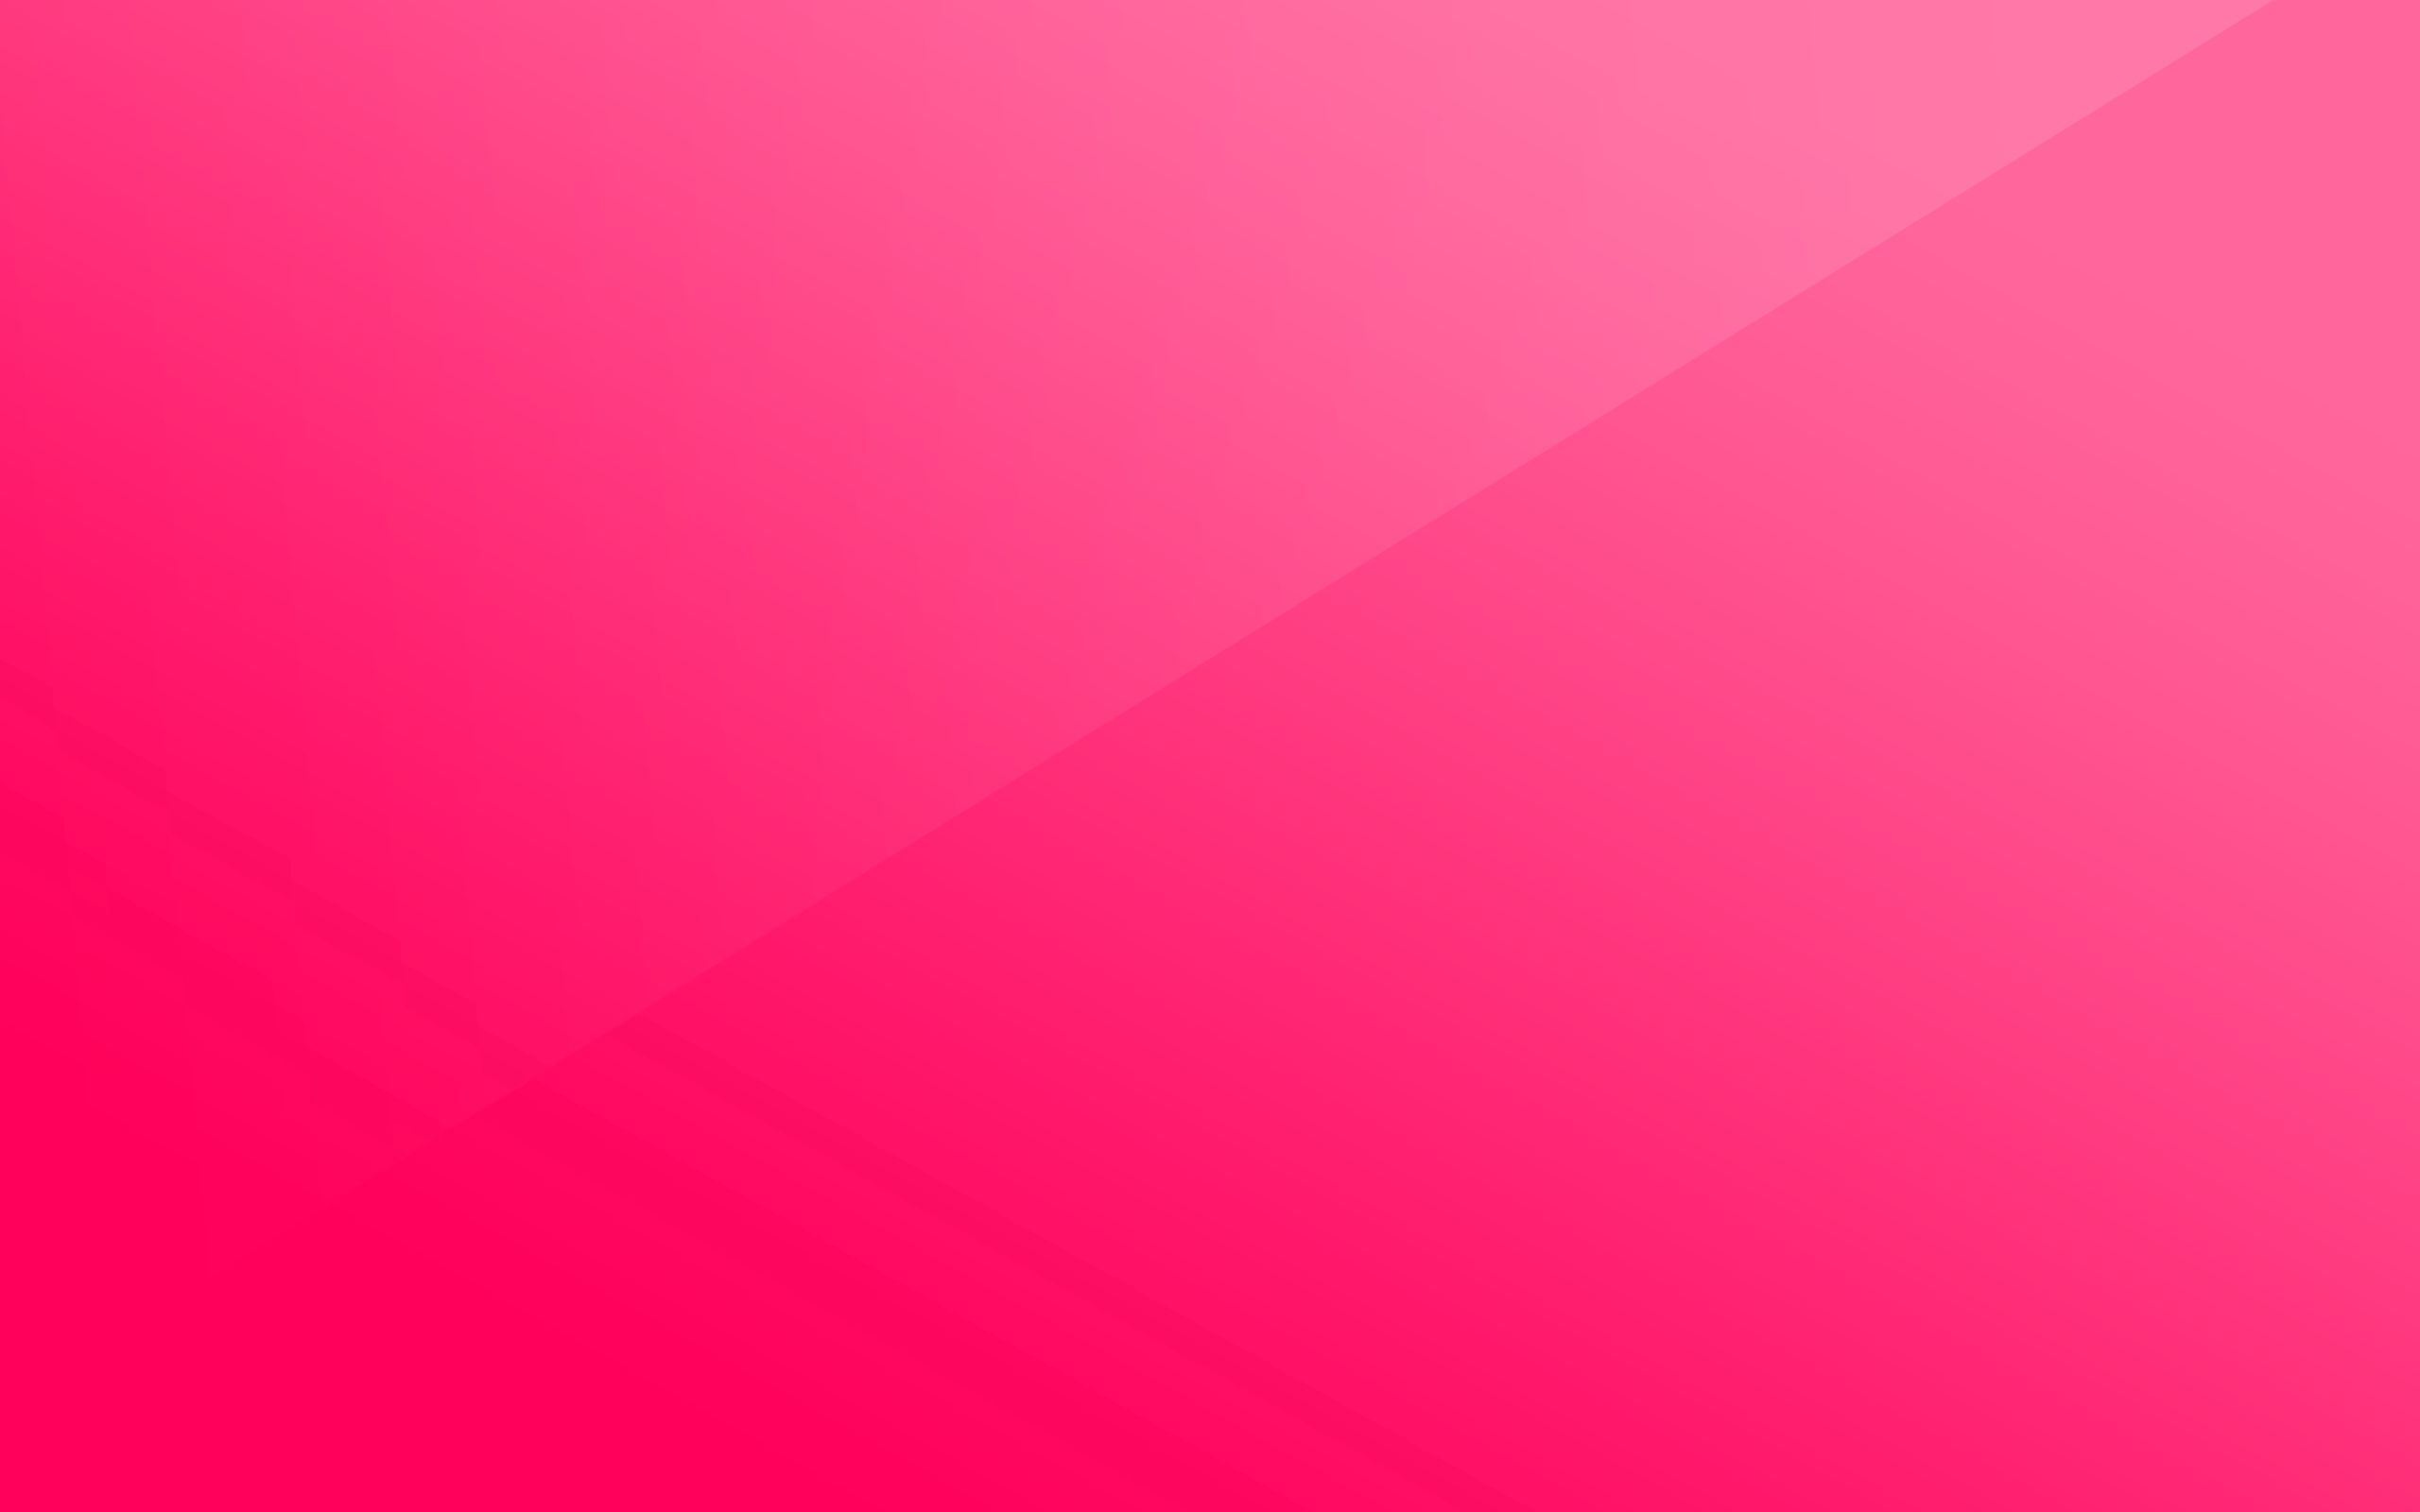 High Definition Pink background